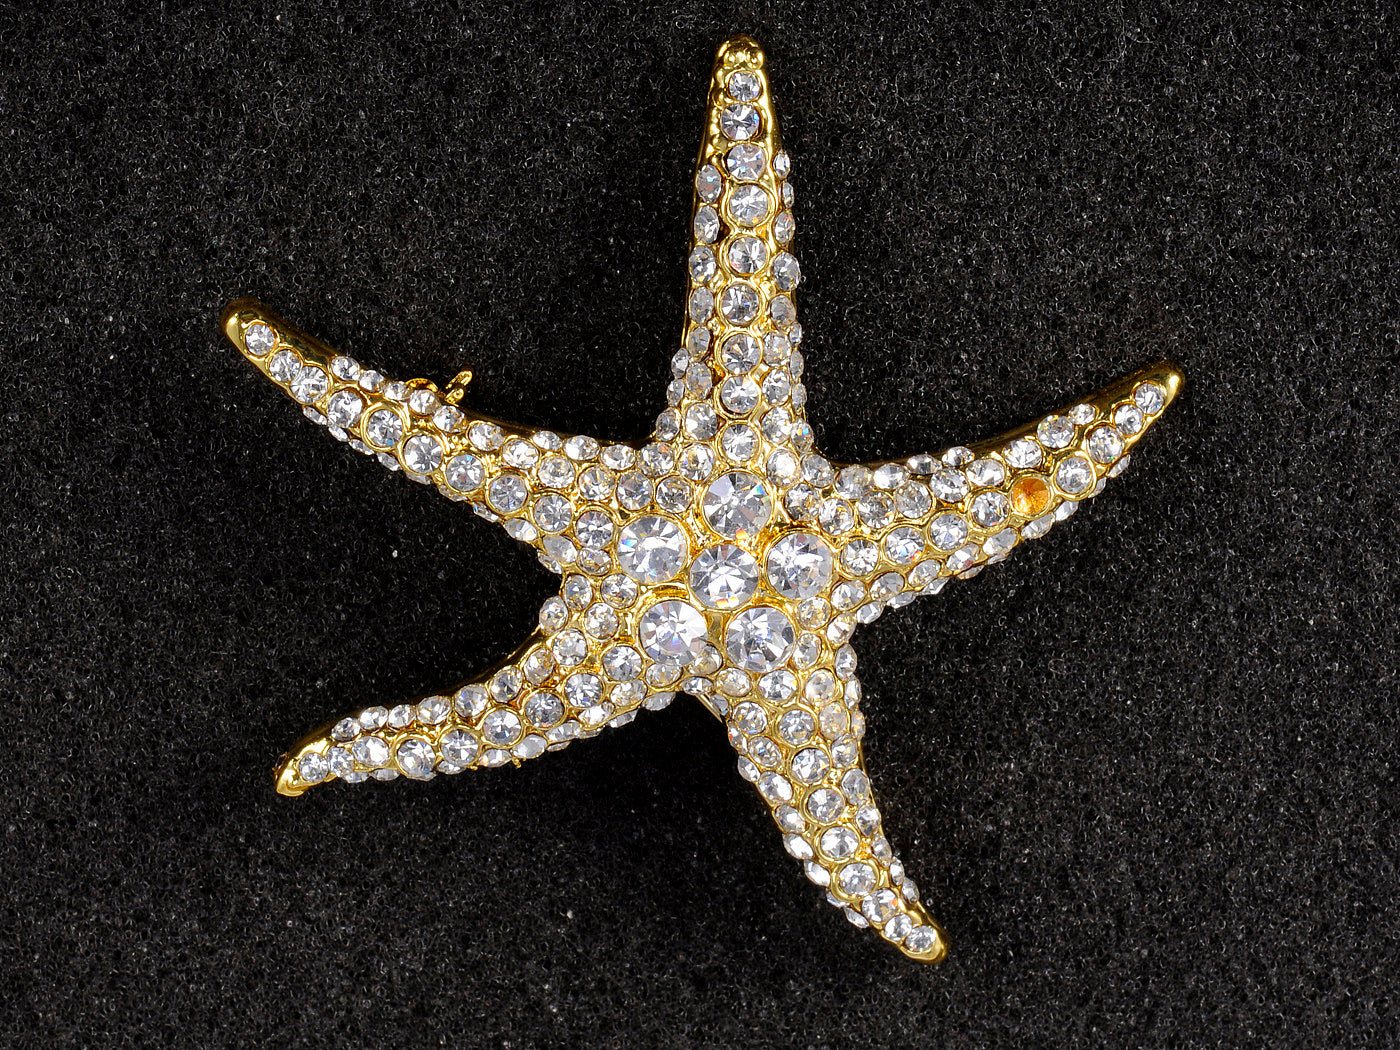 Colored Sea Starfish Brooch Pin